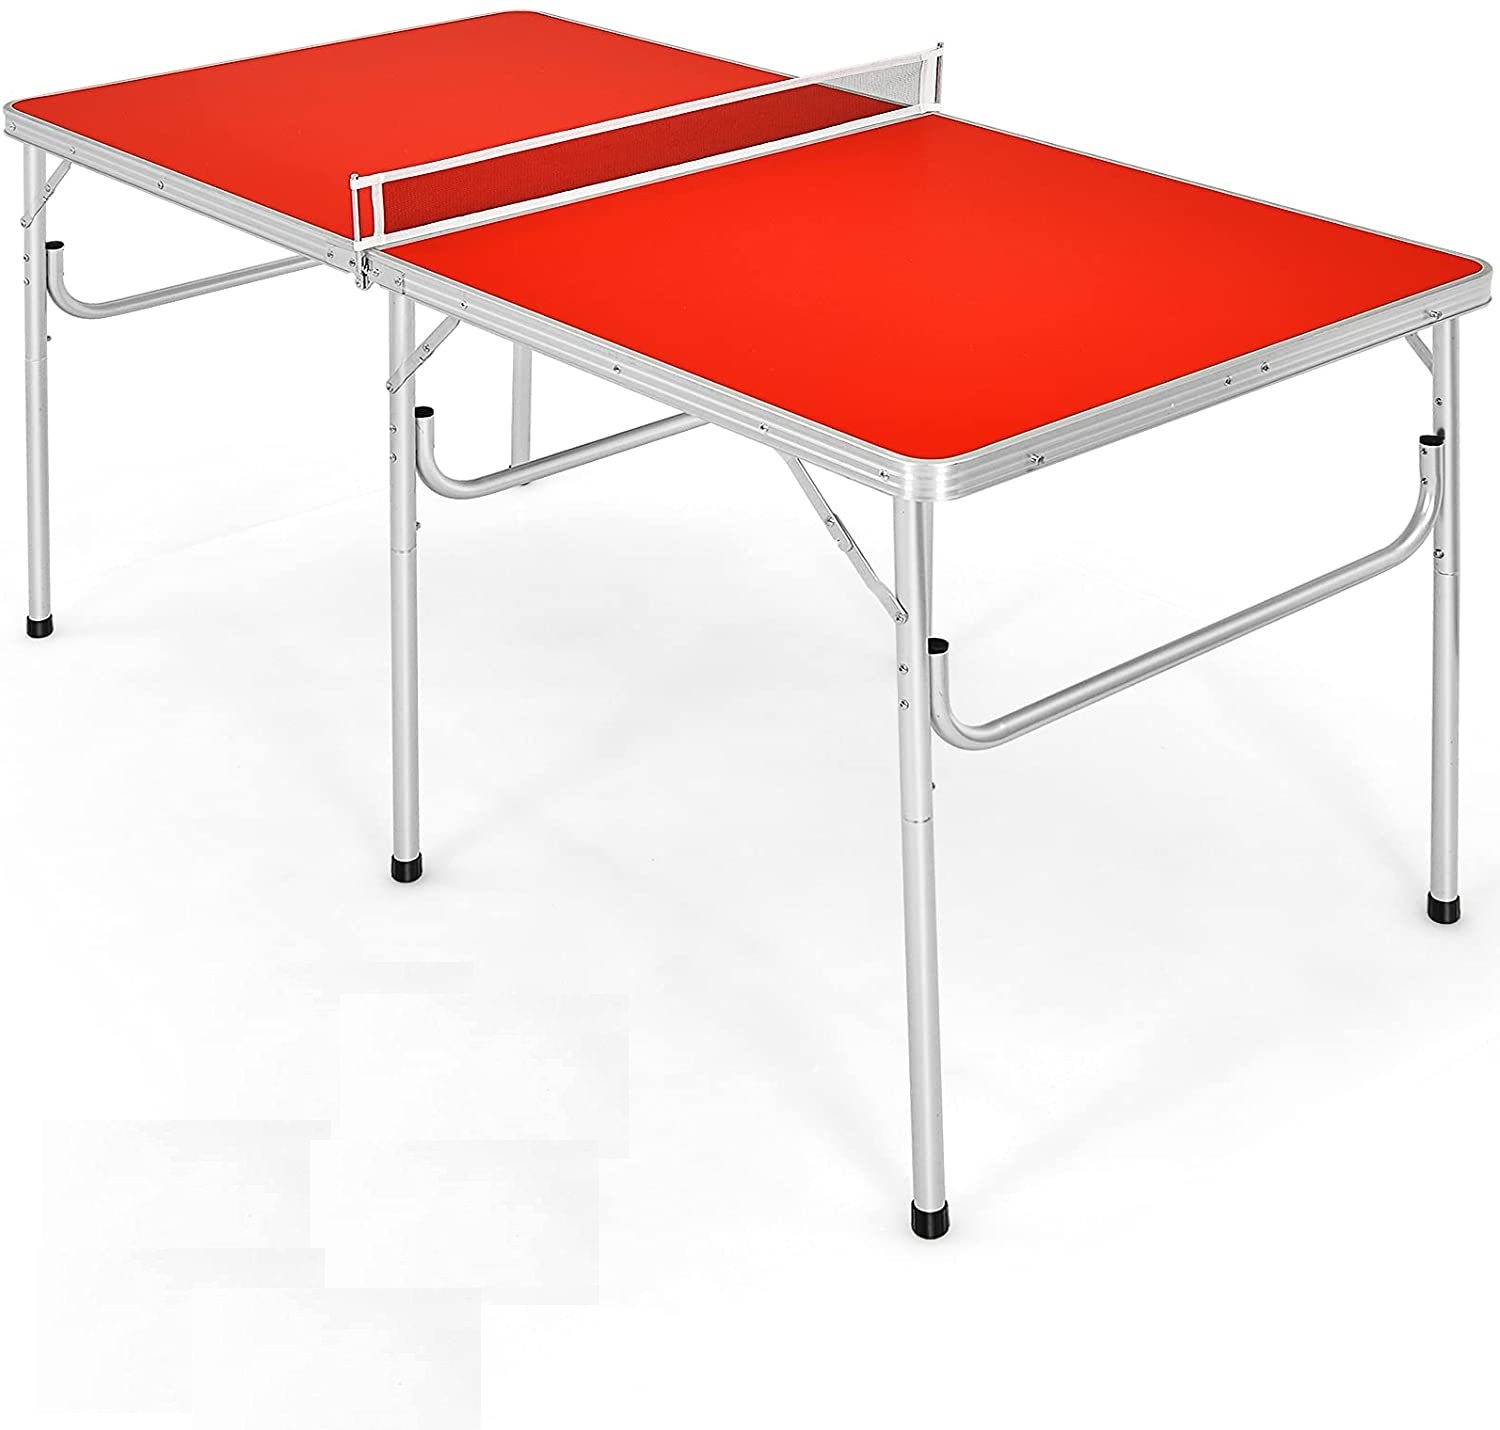 Red De Ping Pong Tenis Mesa Con Soporte Retráctil Adaptable